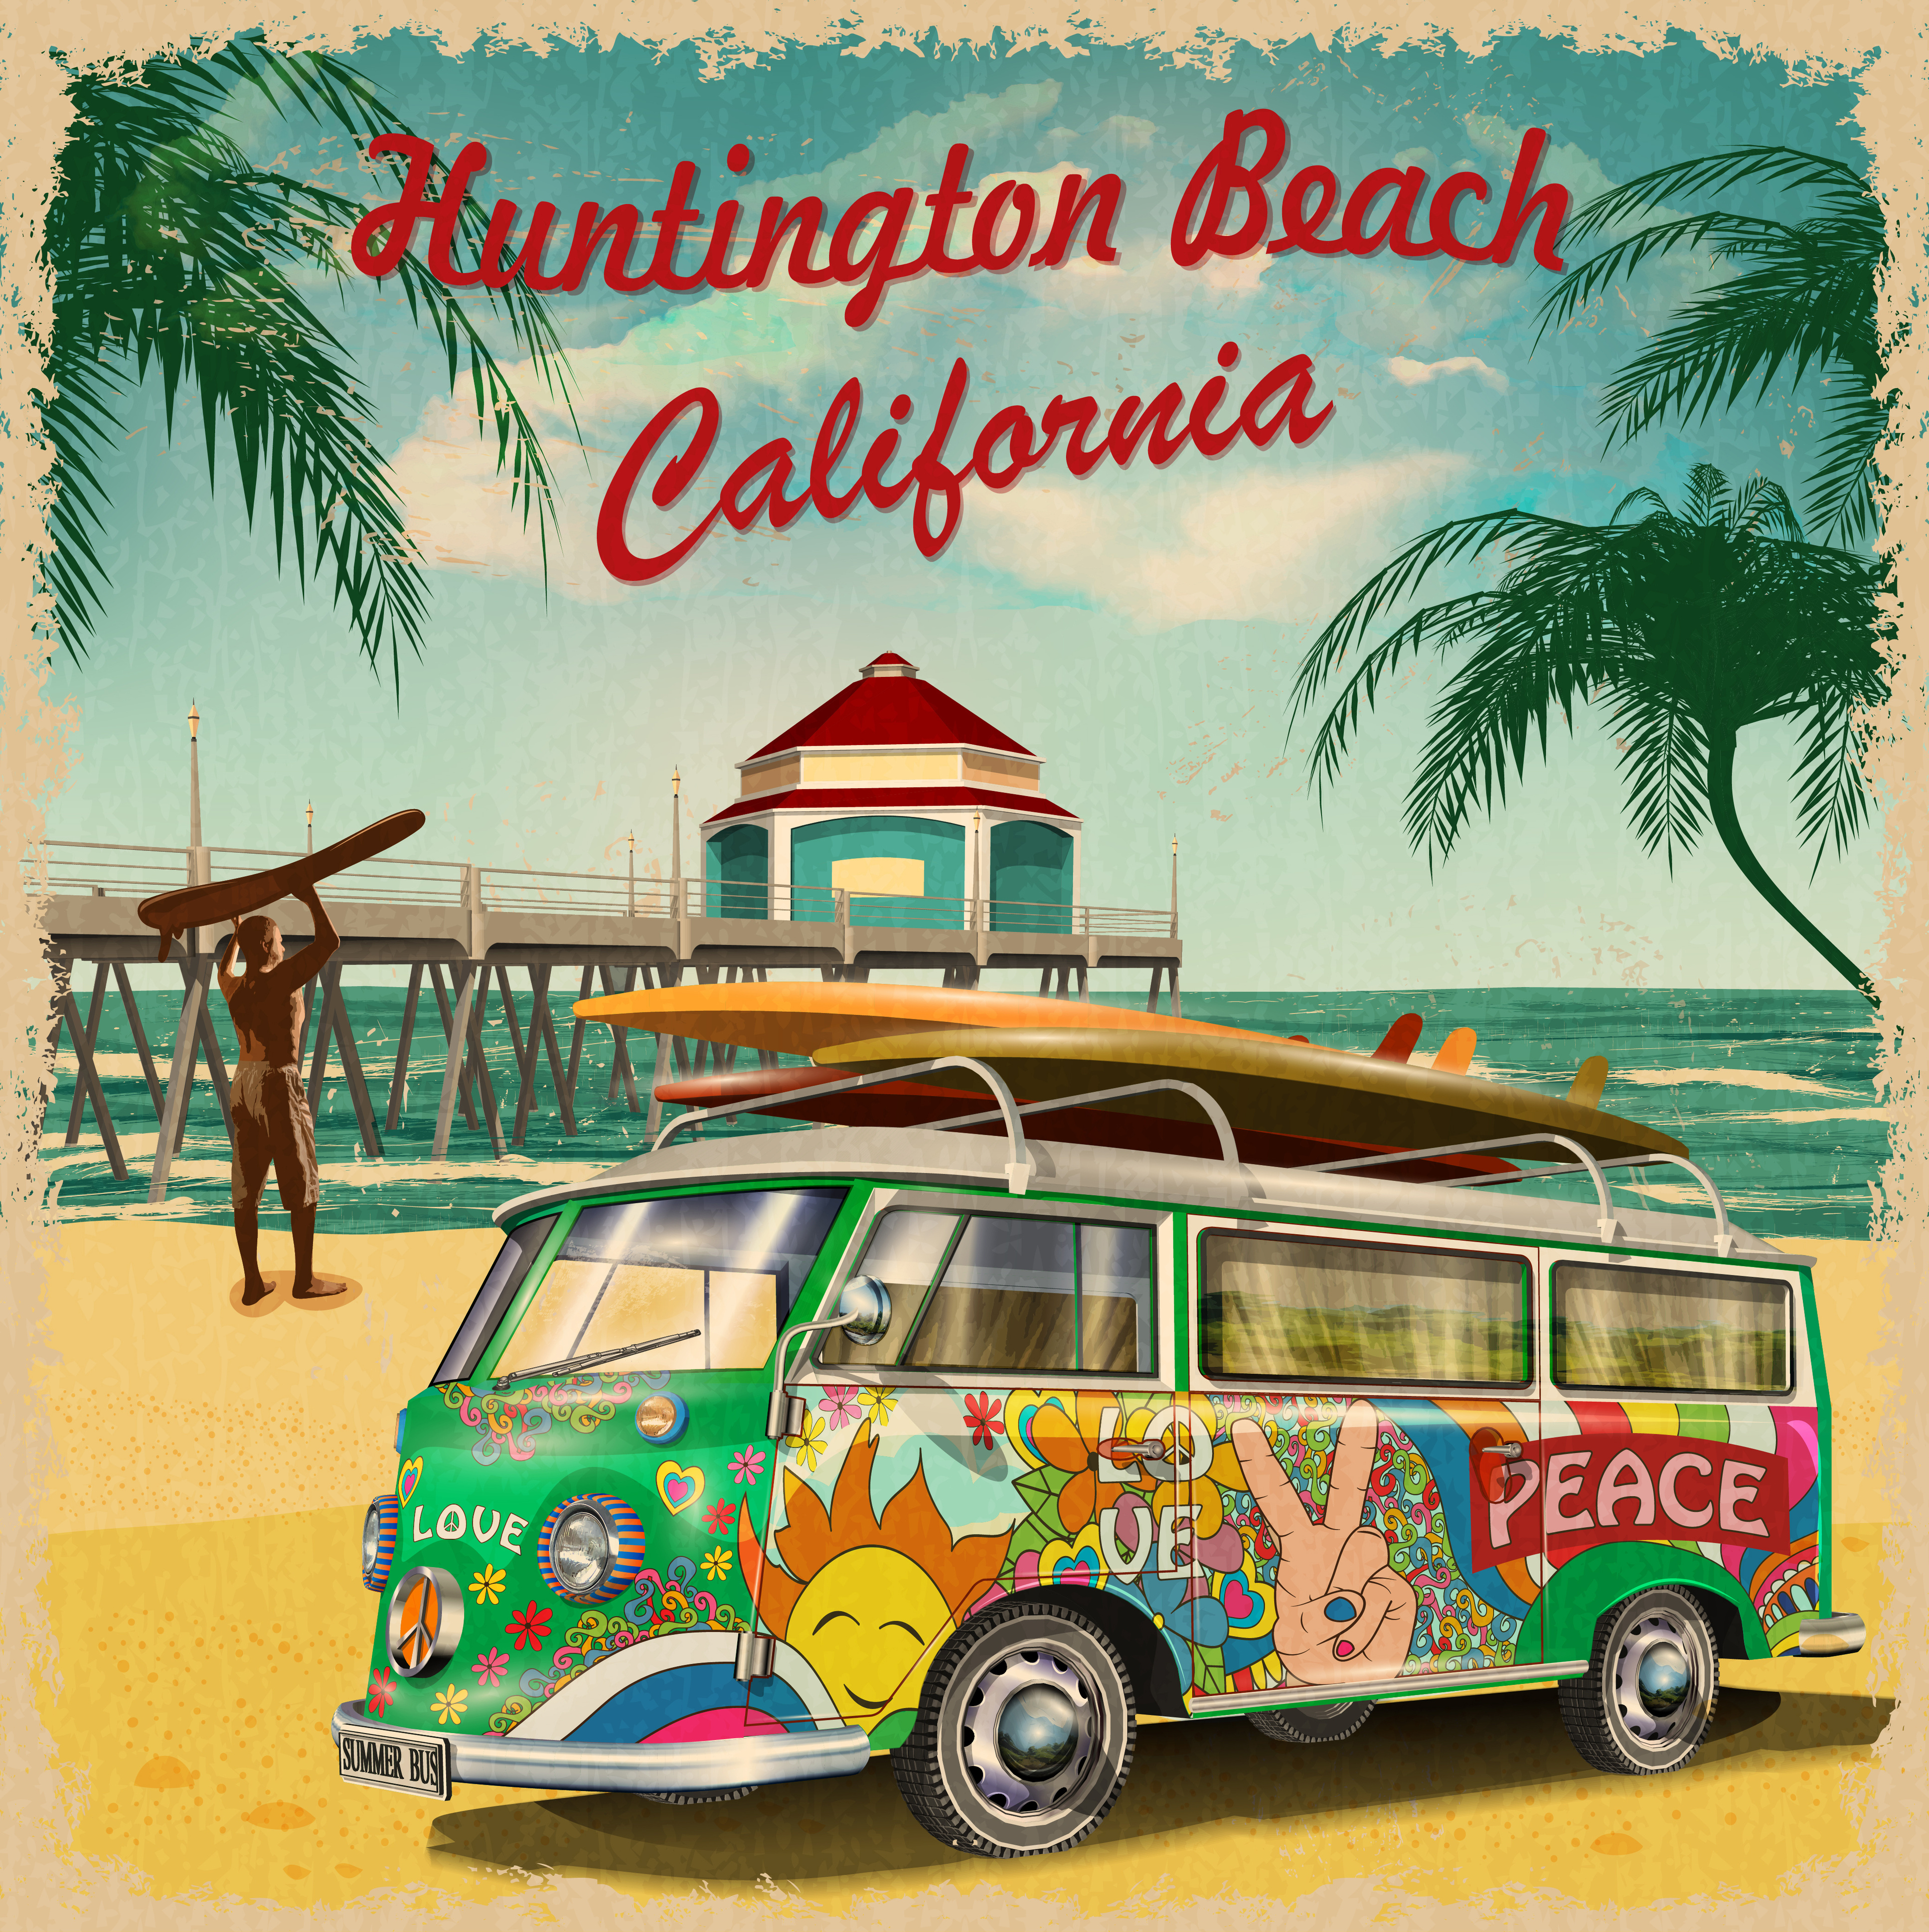 Huntington Beach, California retro poster.